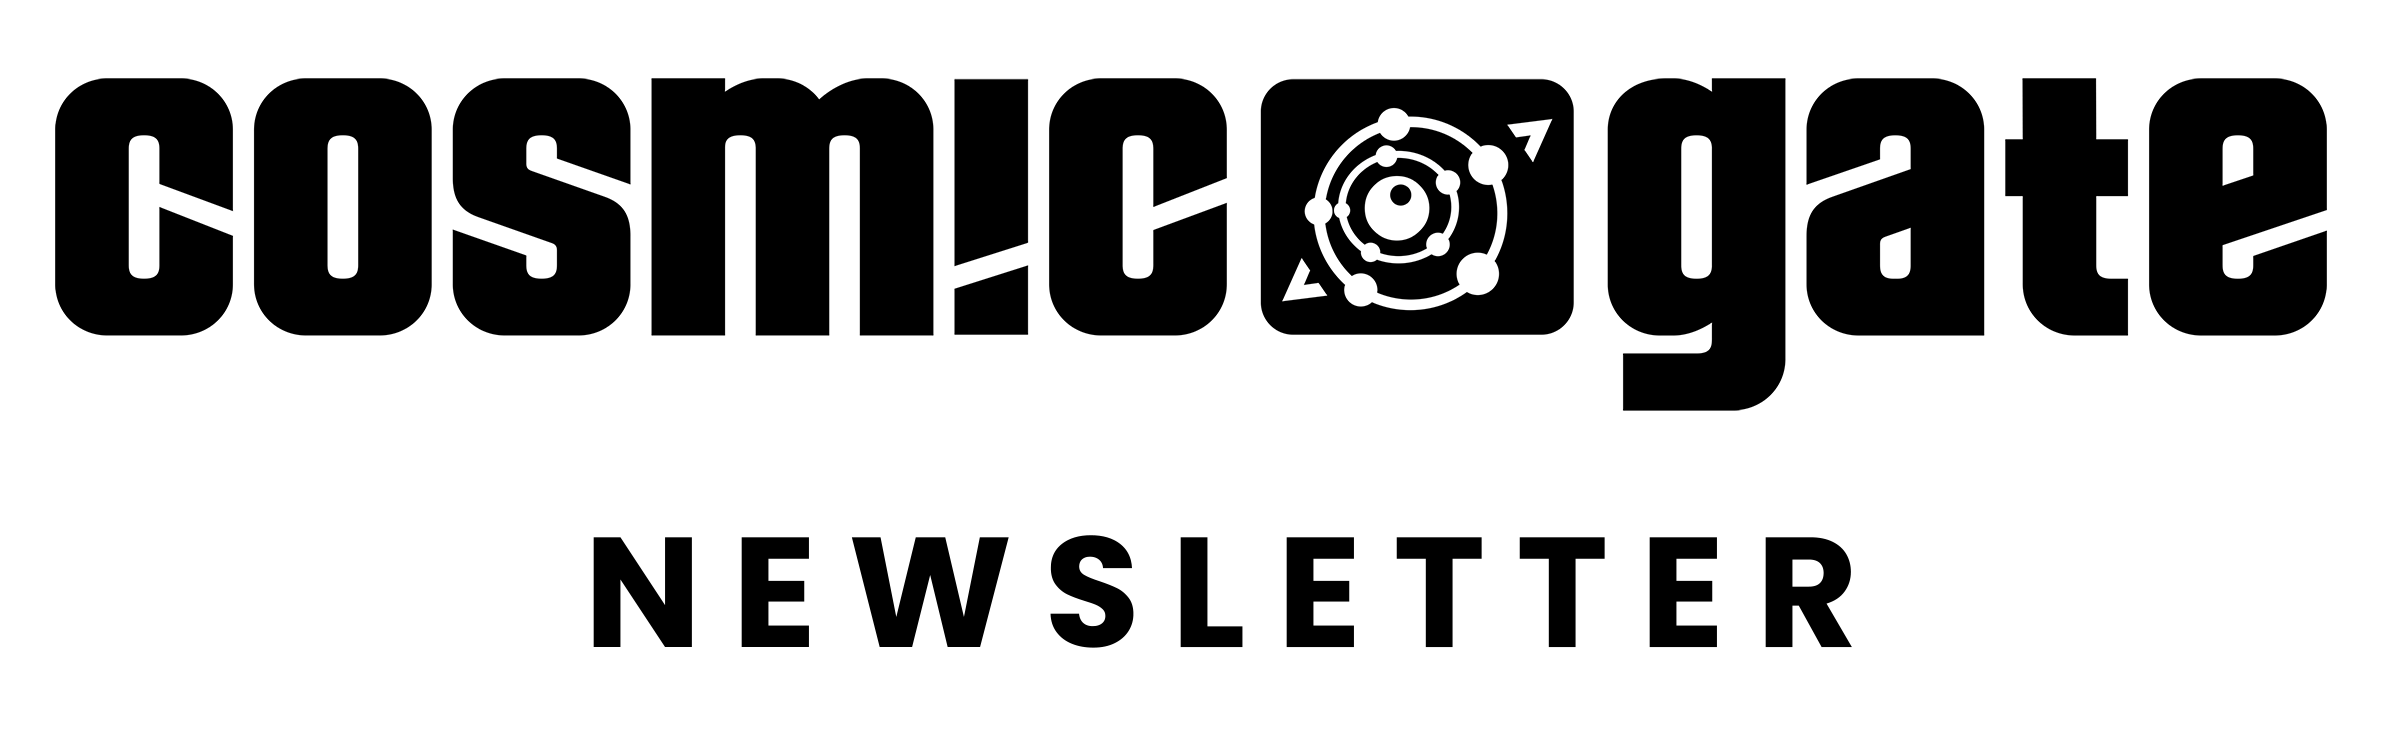 Cosmic Gate Logo